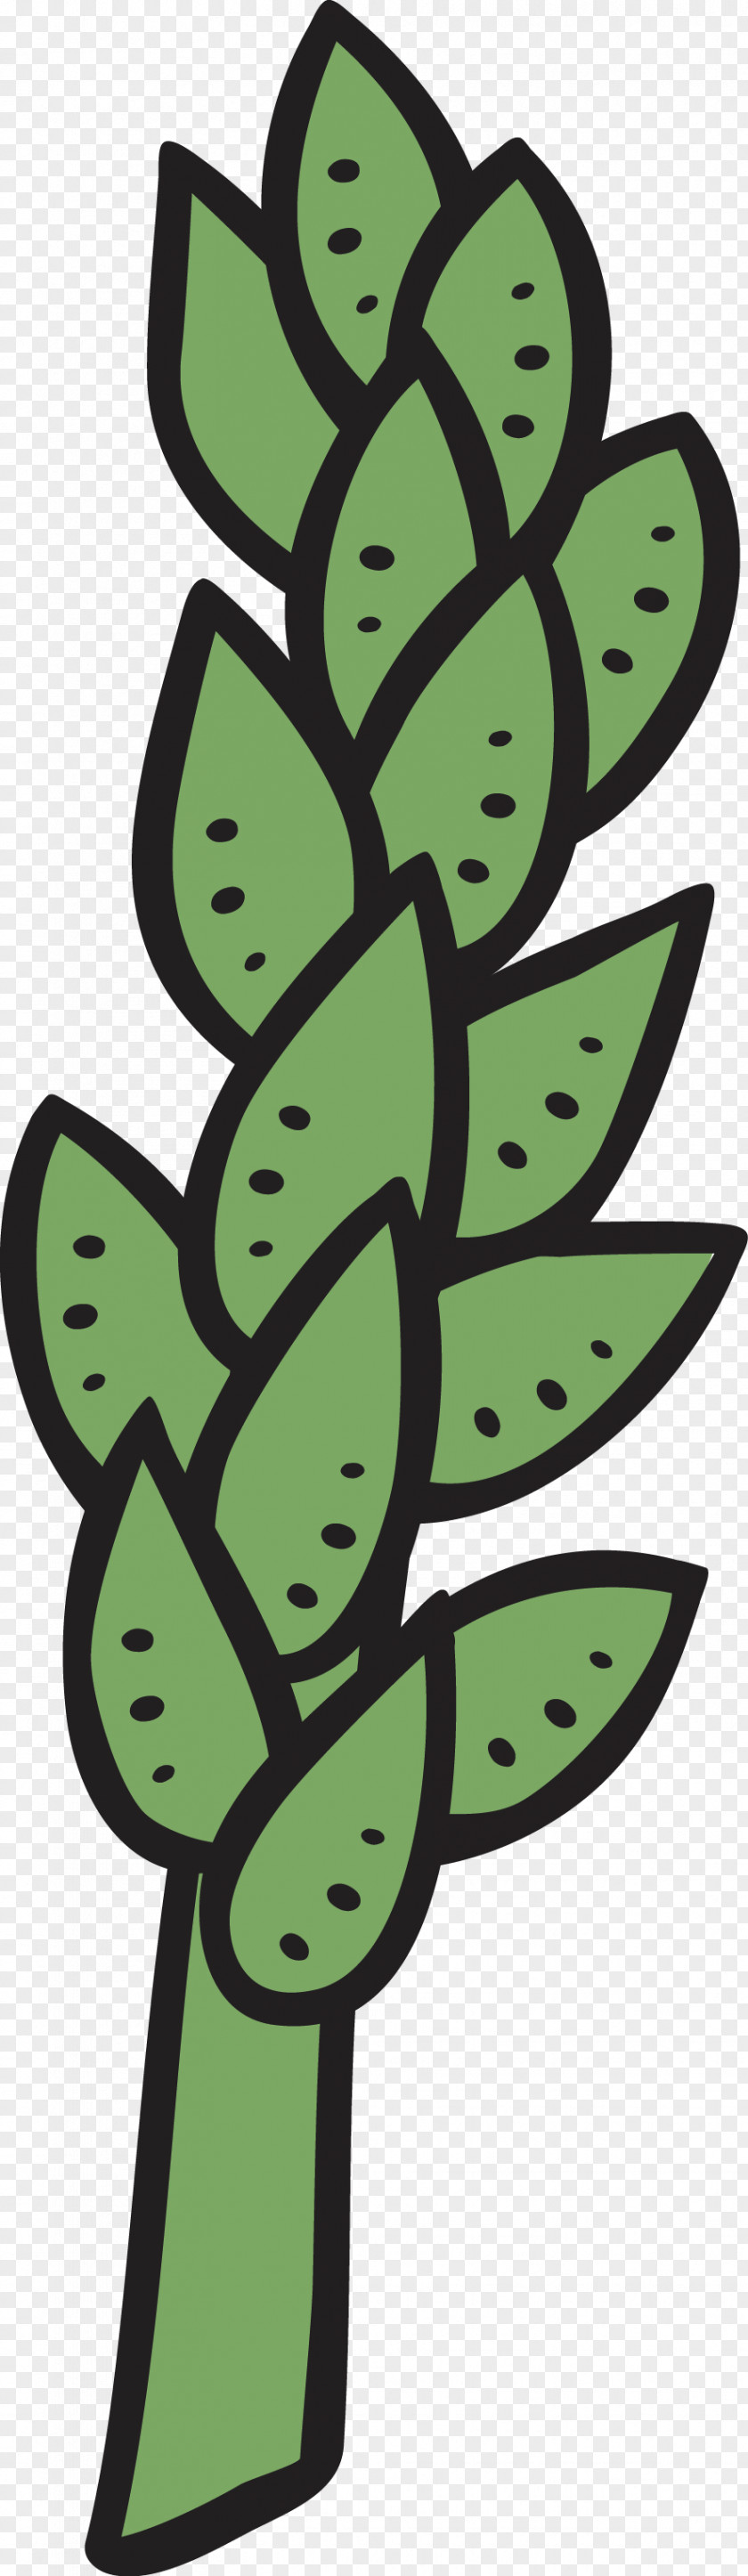 Tree Cactus Pilosocereus Leaf Succulent Plant Clip Art PNG